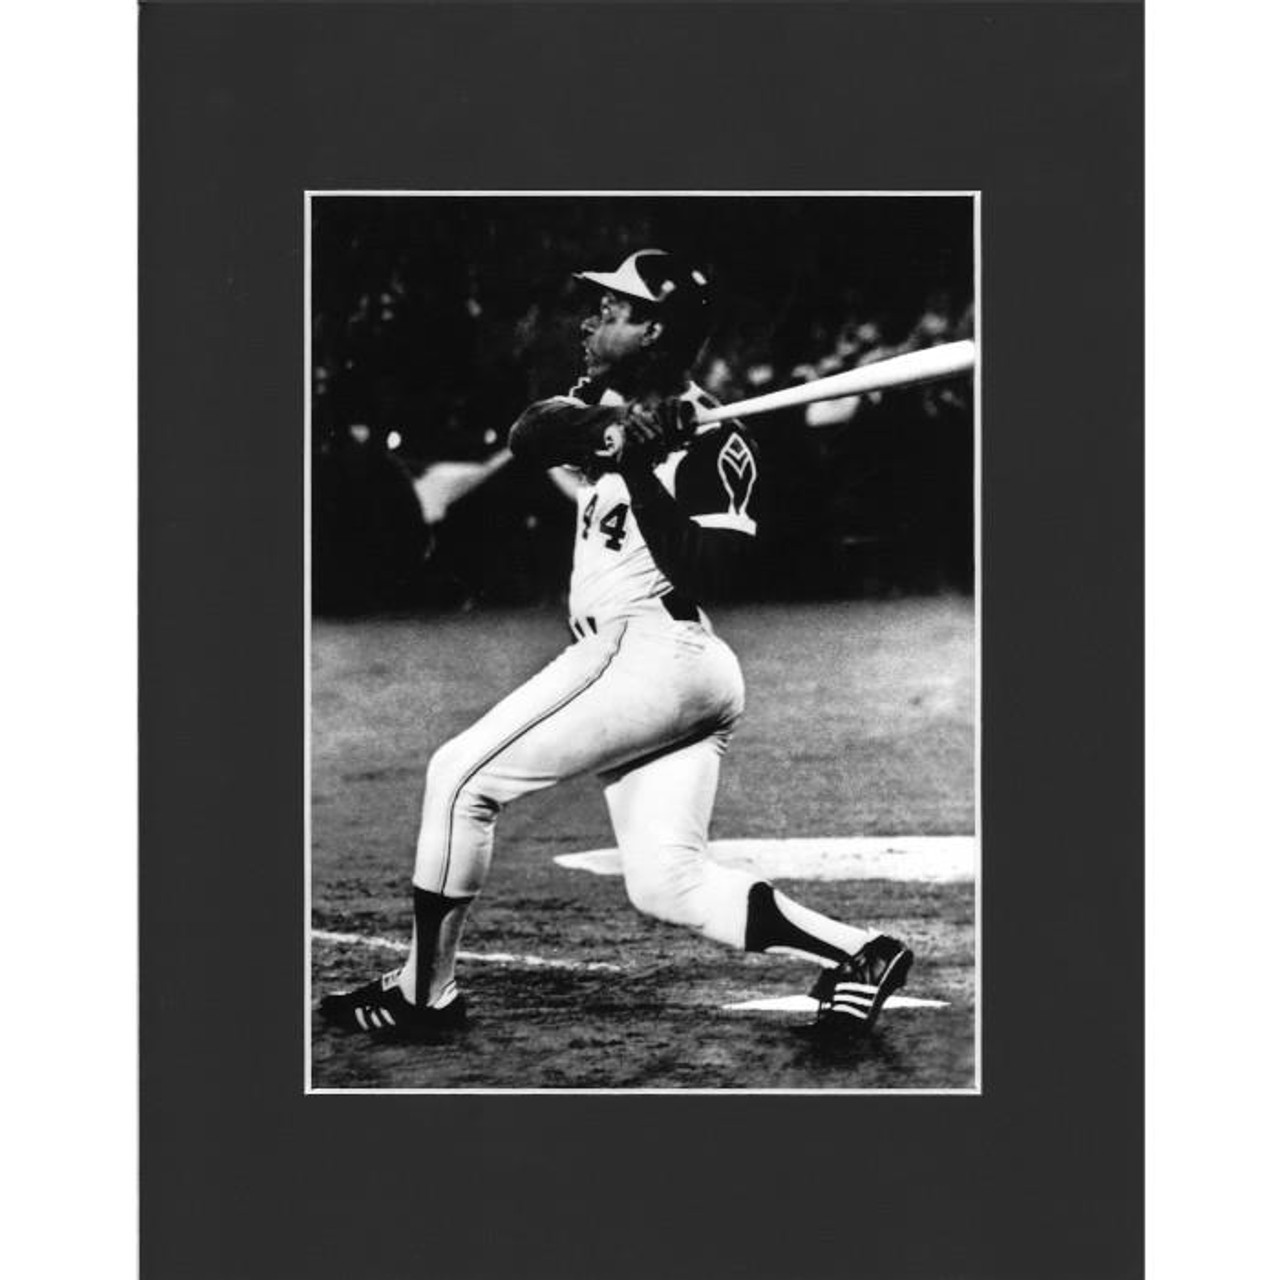 Hank Aaron Men's Atlanta Braves 1974 Throwback Jersey - White Replica